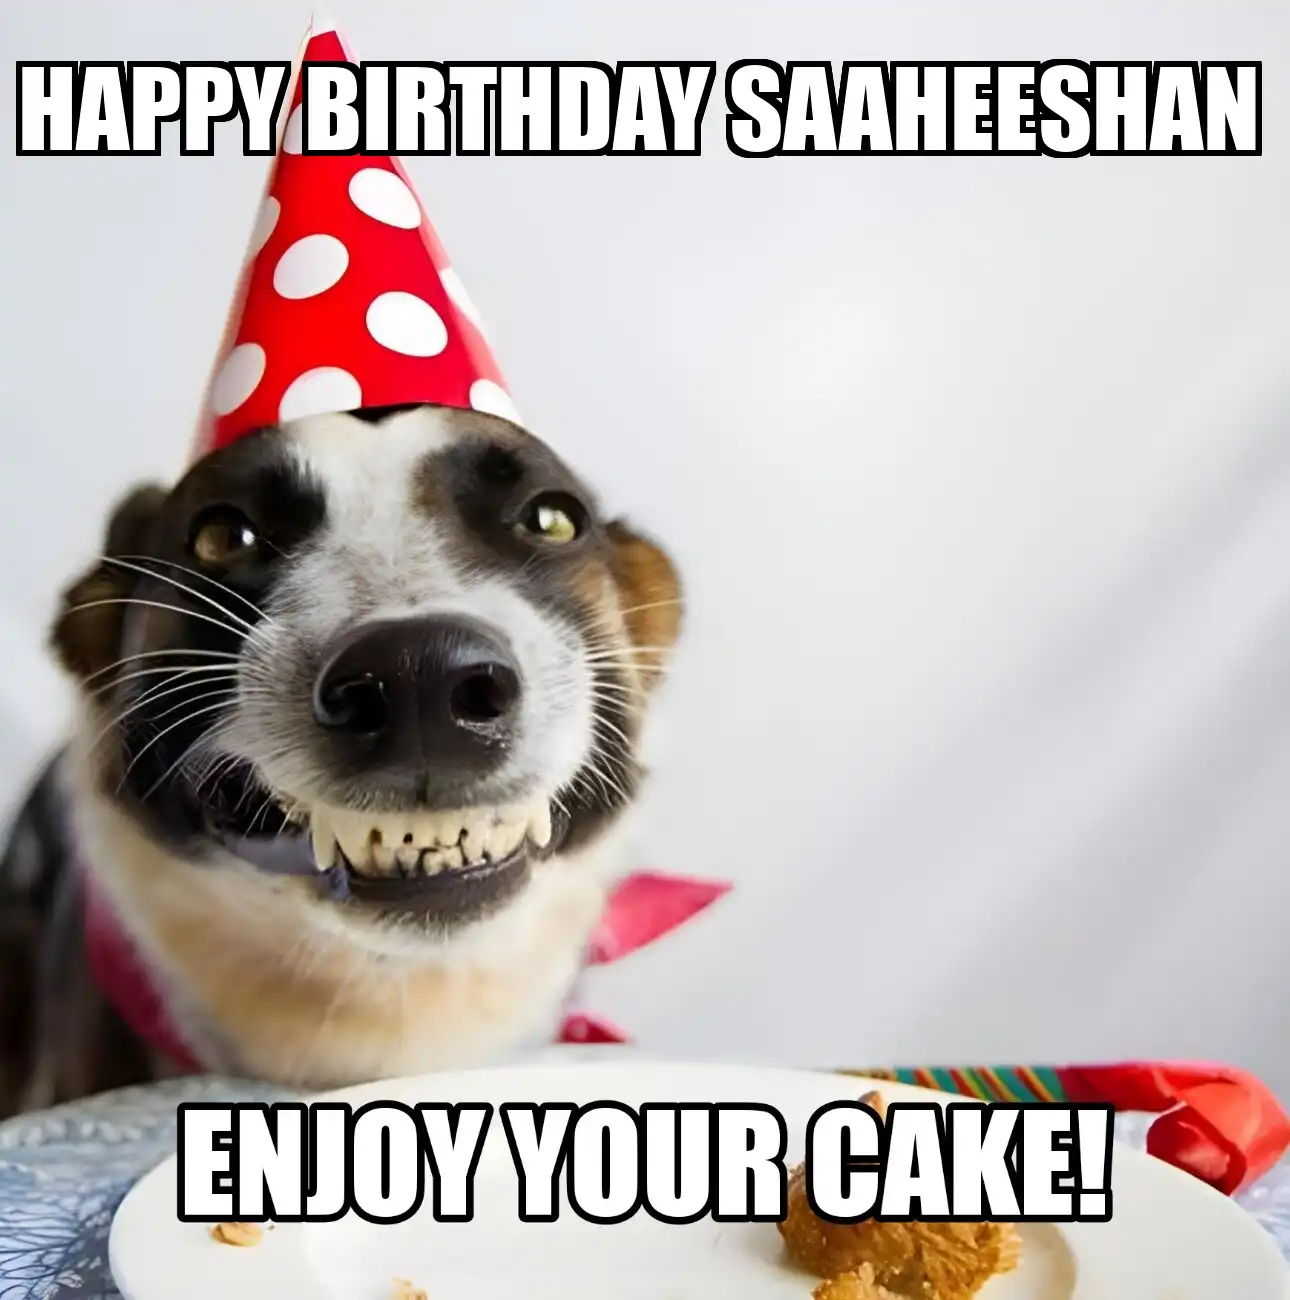 Happy Birthday Saaheeshan Enjoy Your Cake Dog Meme